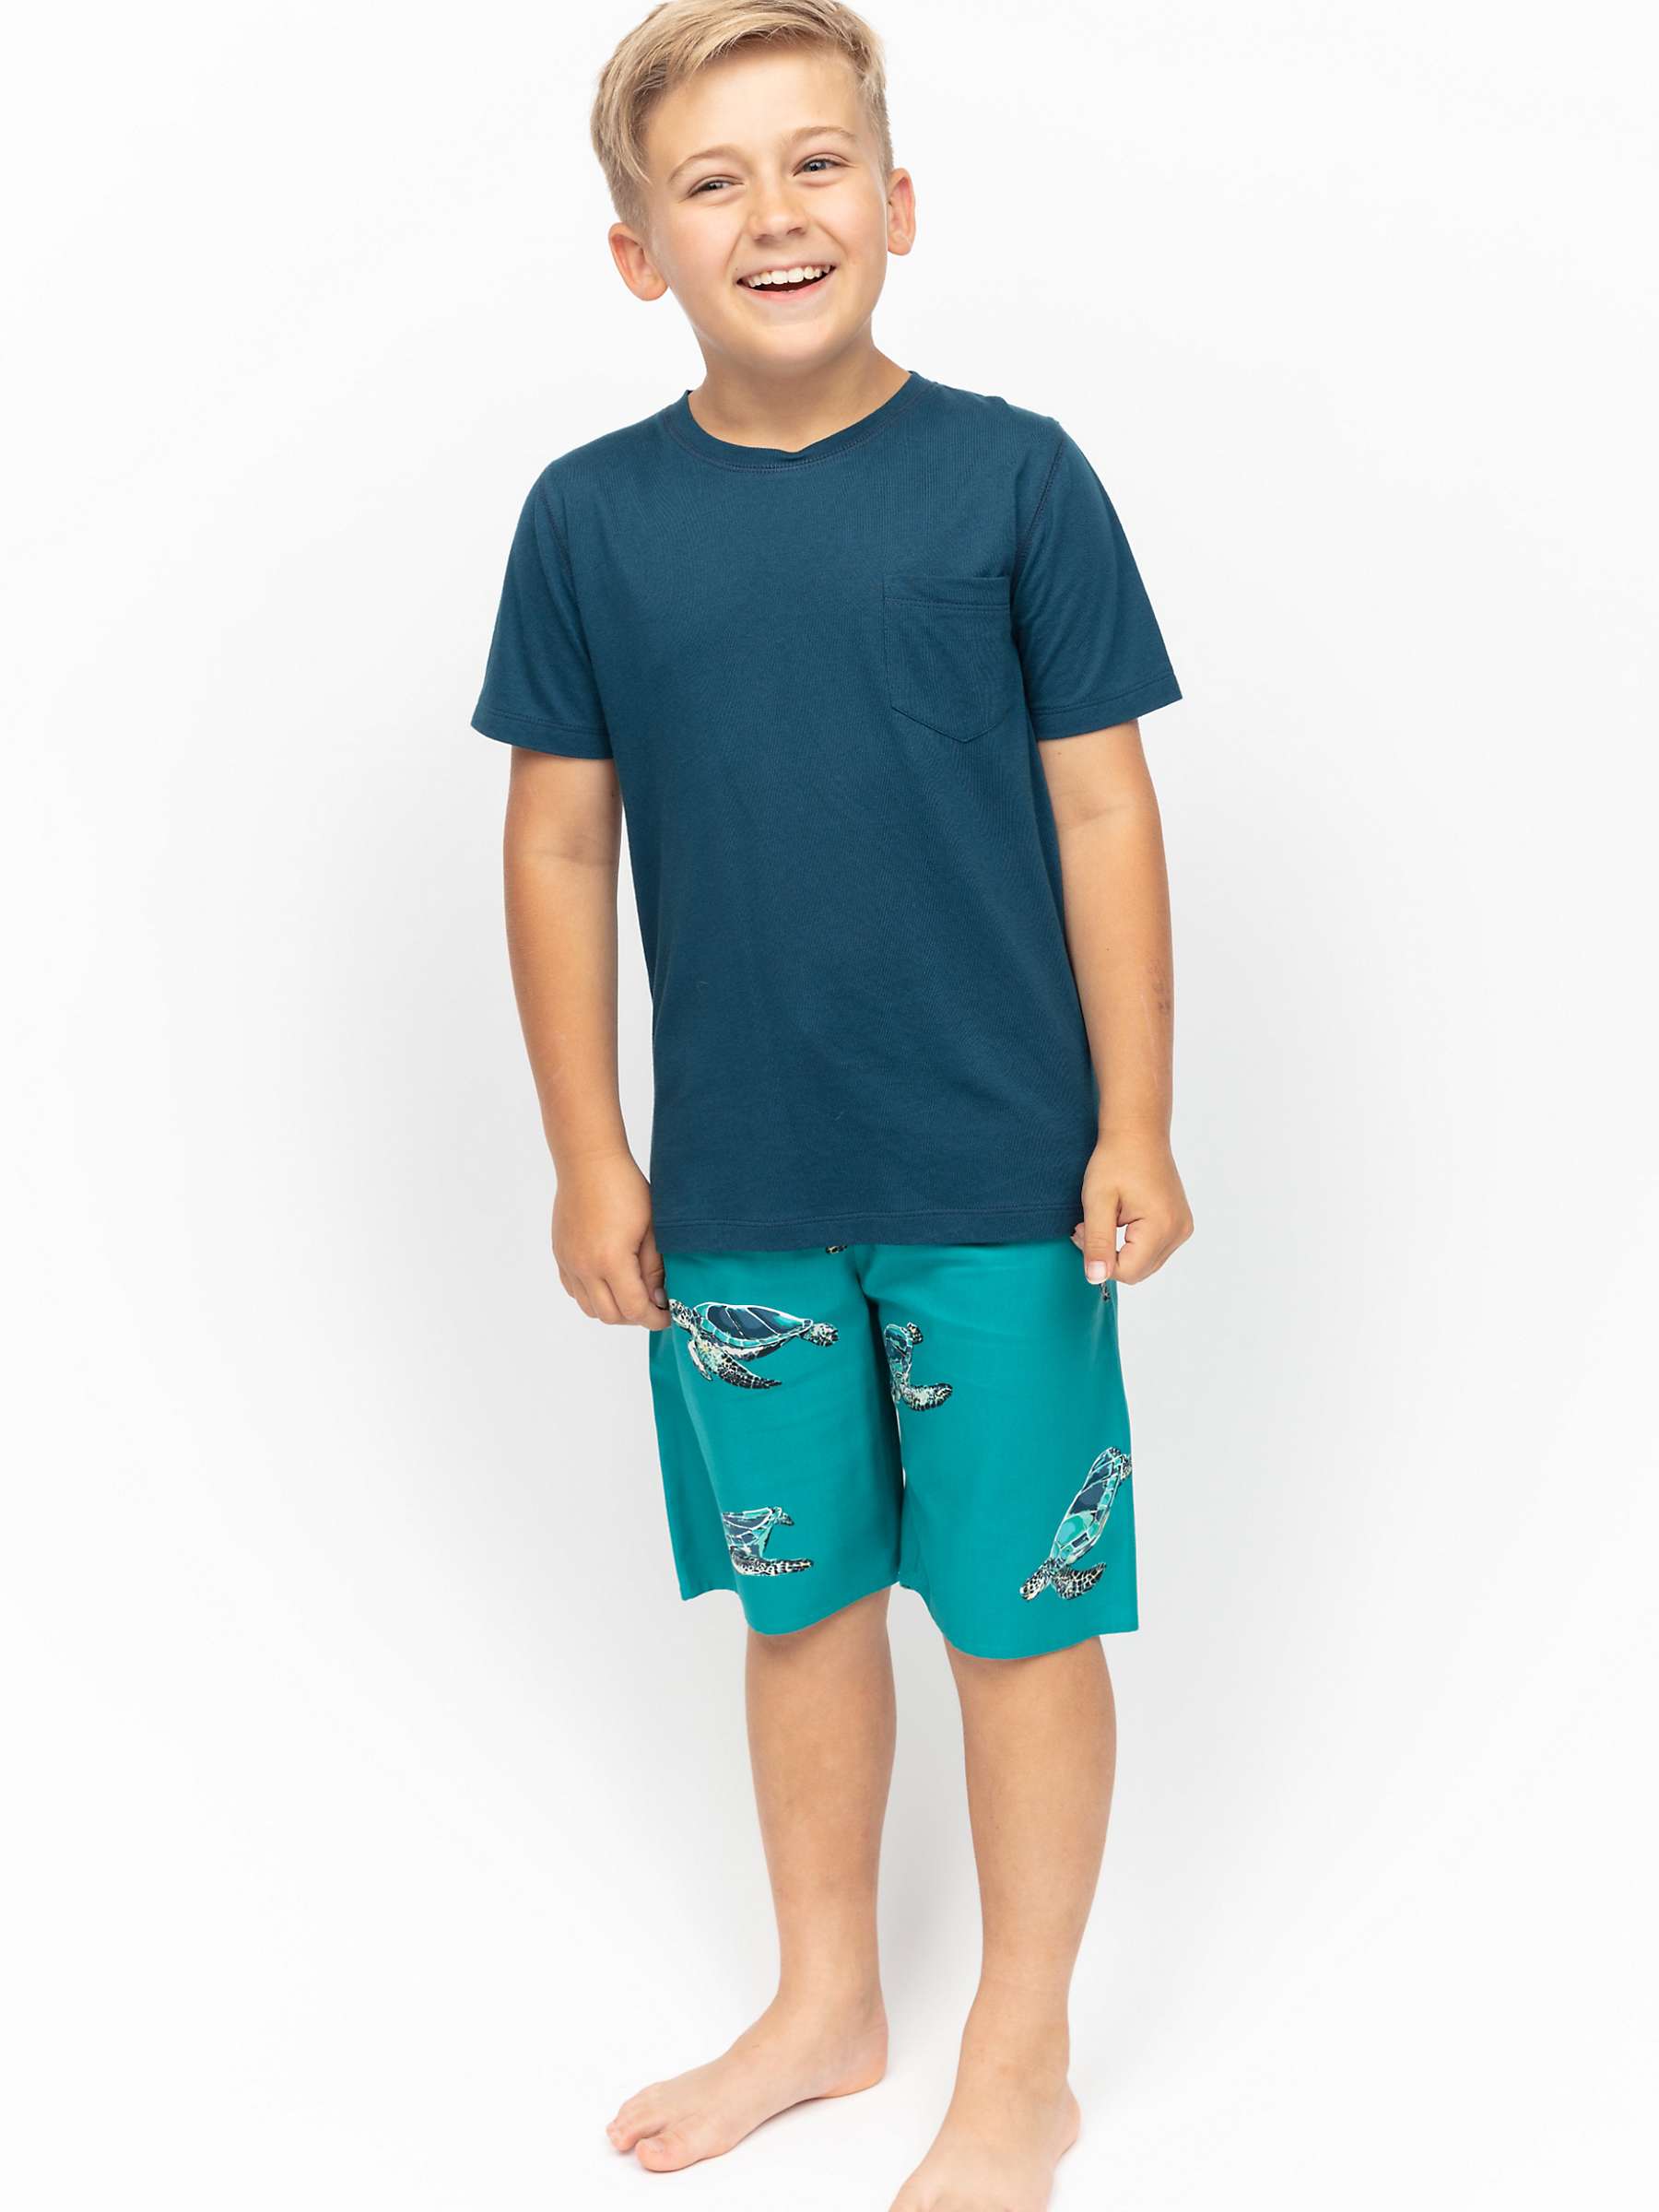 Buy Minijammies Kids' Cove Turtle Print Shorty Pyjamas Set, Teal Online at johnlewis.com